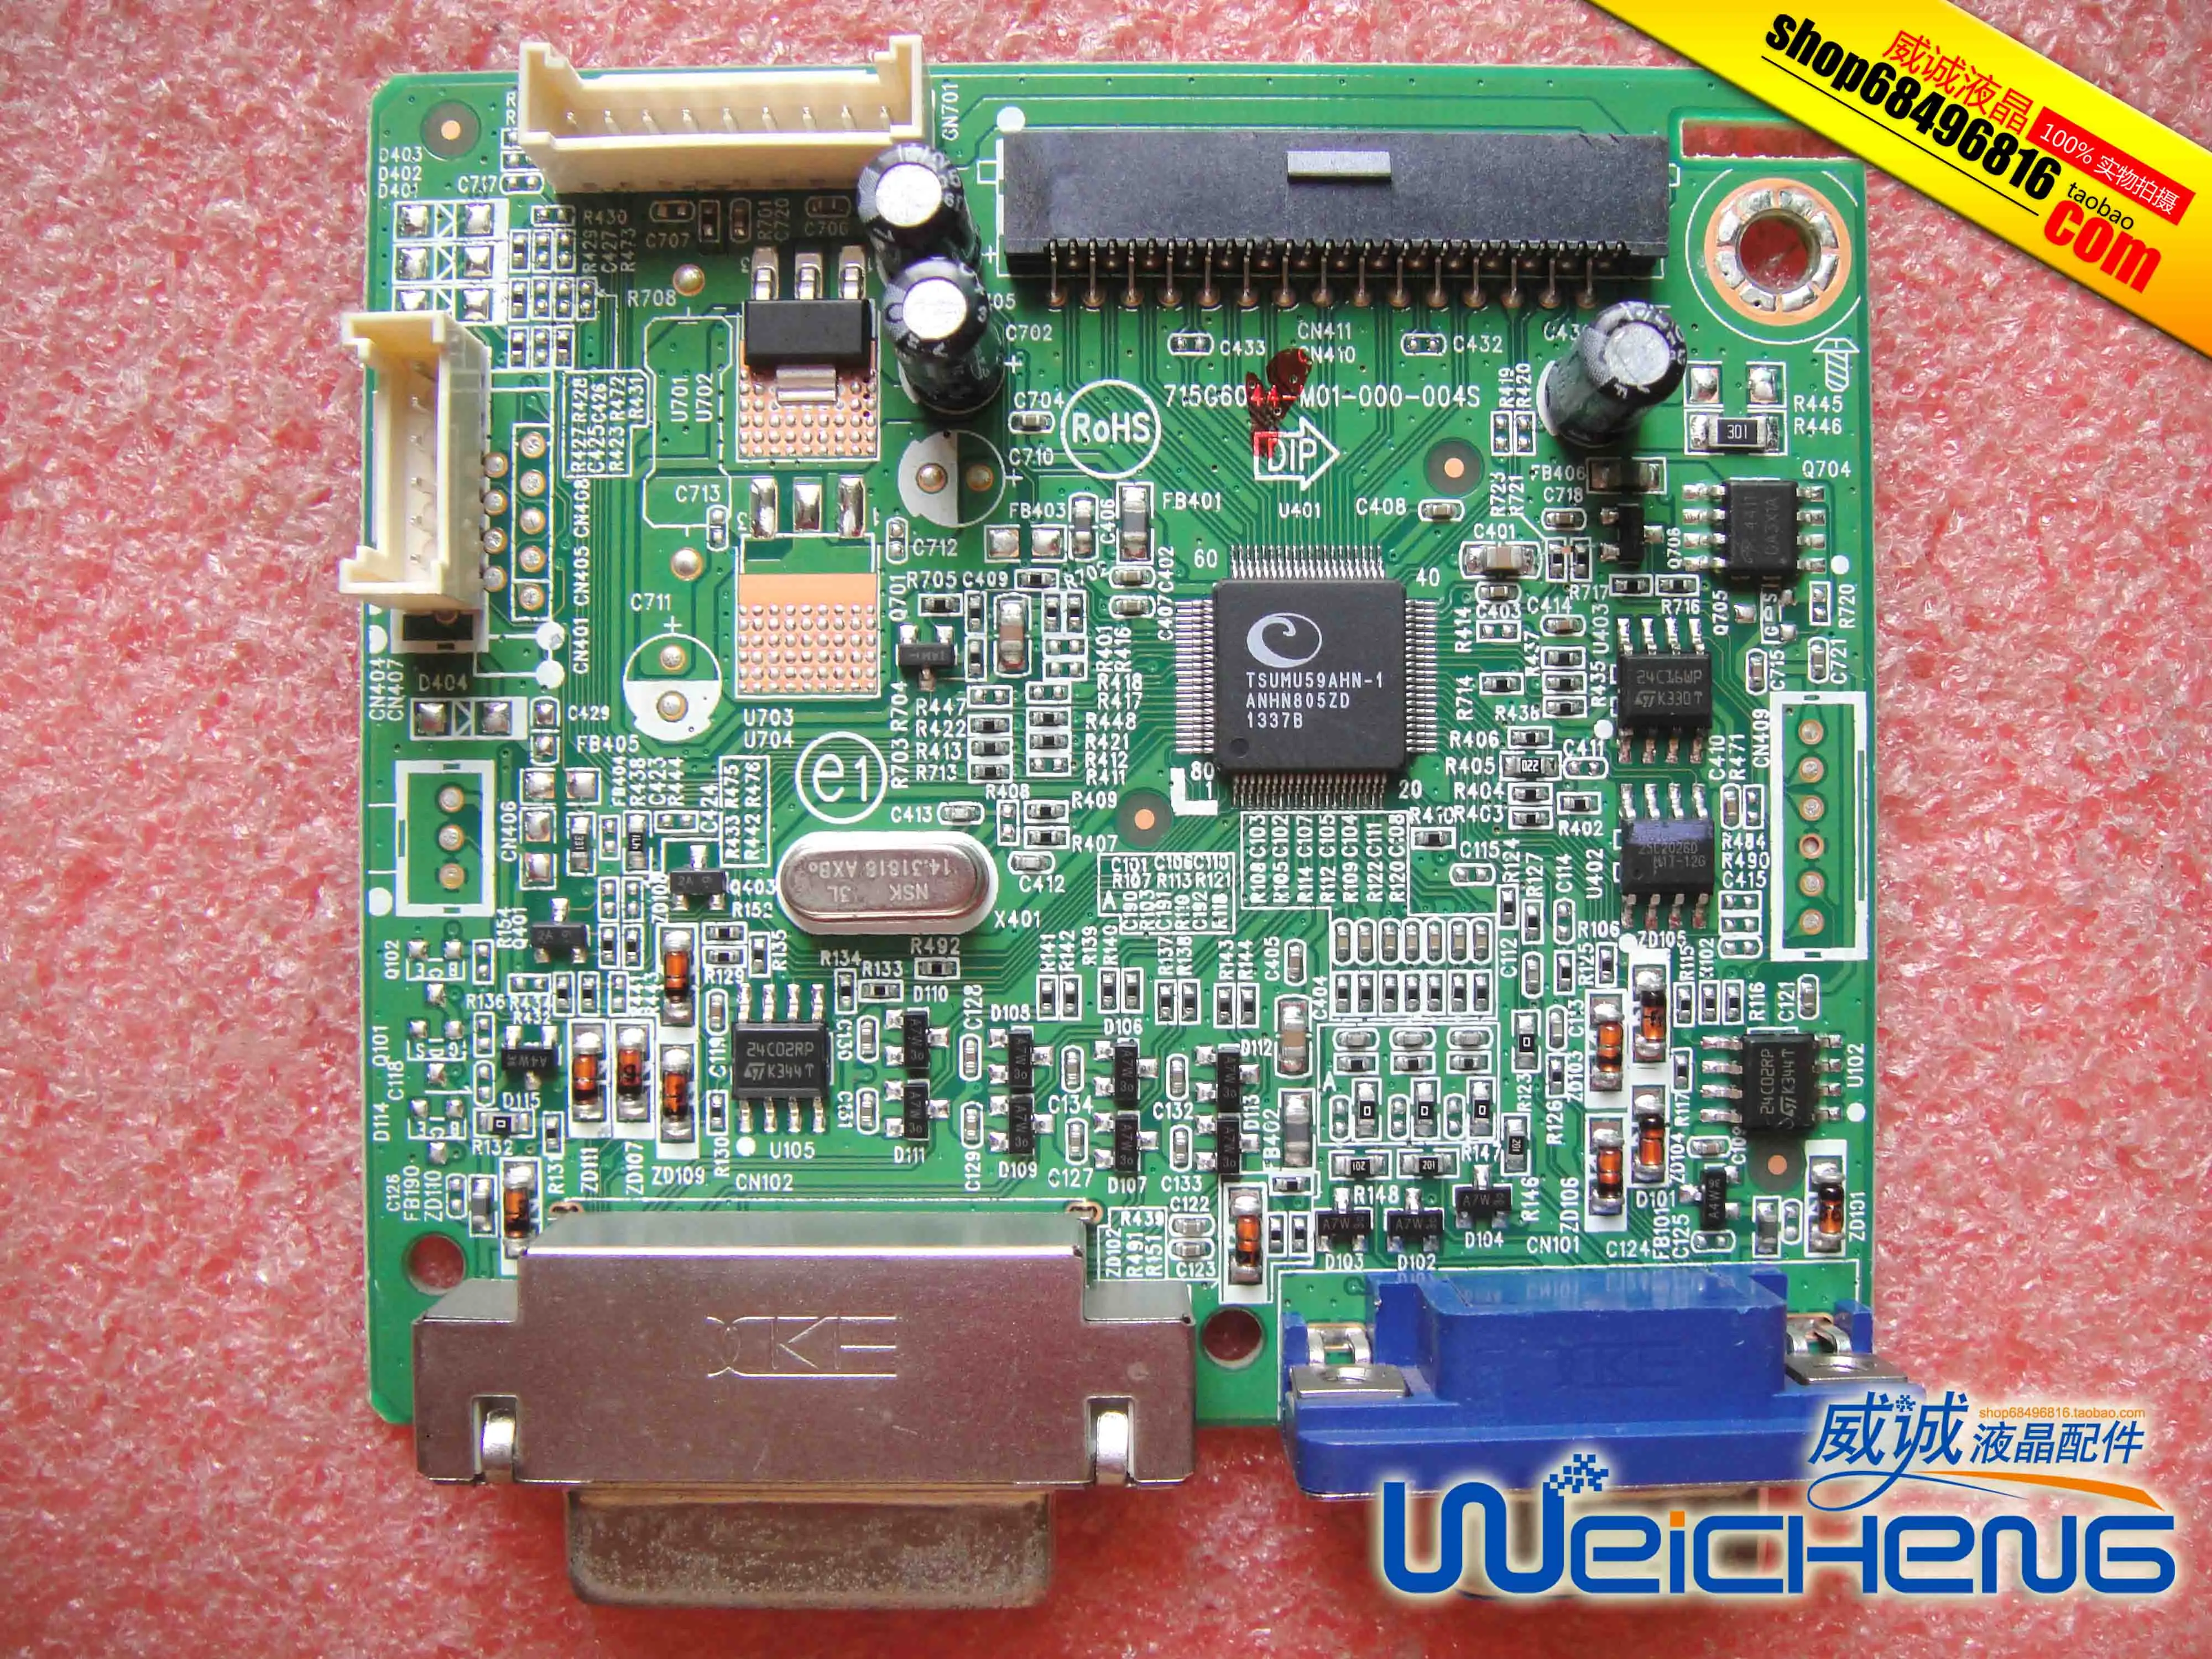 

LT1713 driver board motherboard 715G6044-M01-000-004S